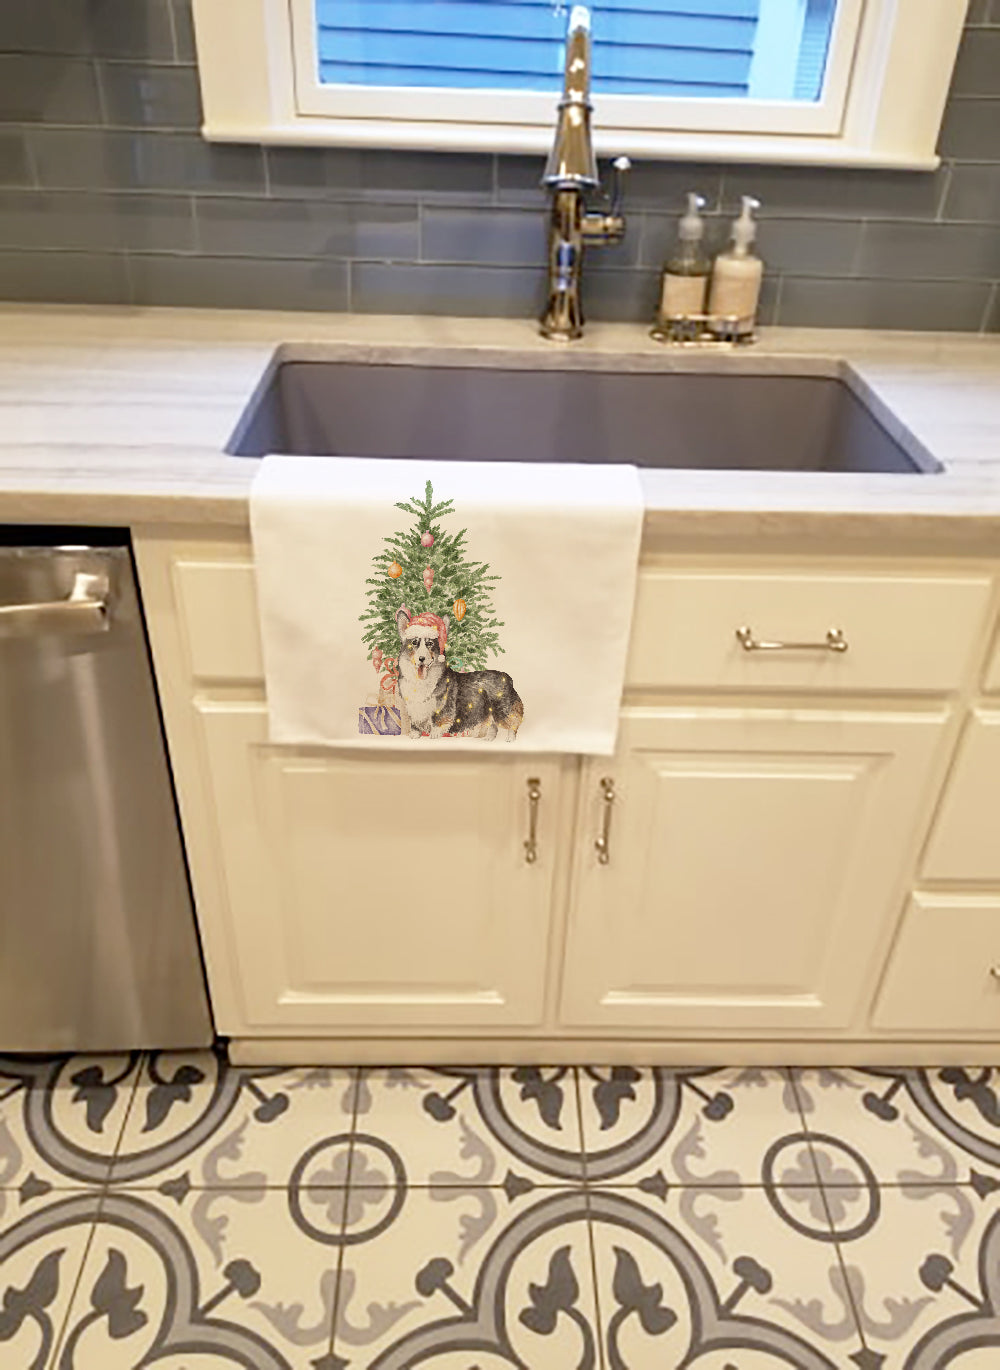 Corgi Pembroke Tricolor Christmas Presents and Tree White Kitchen Towel Set of 2 - the-store.com